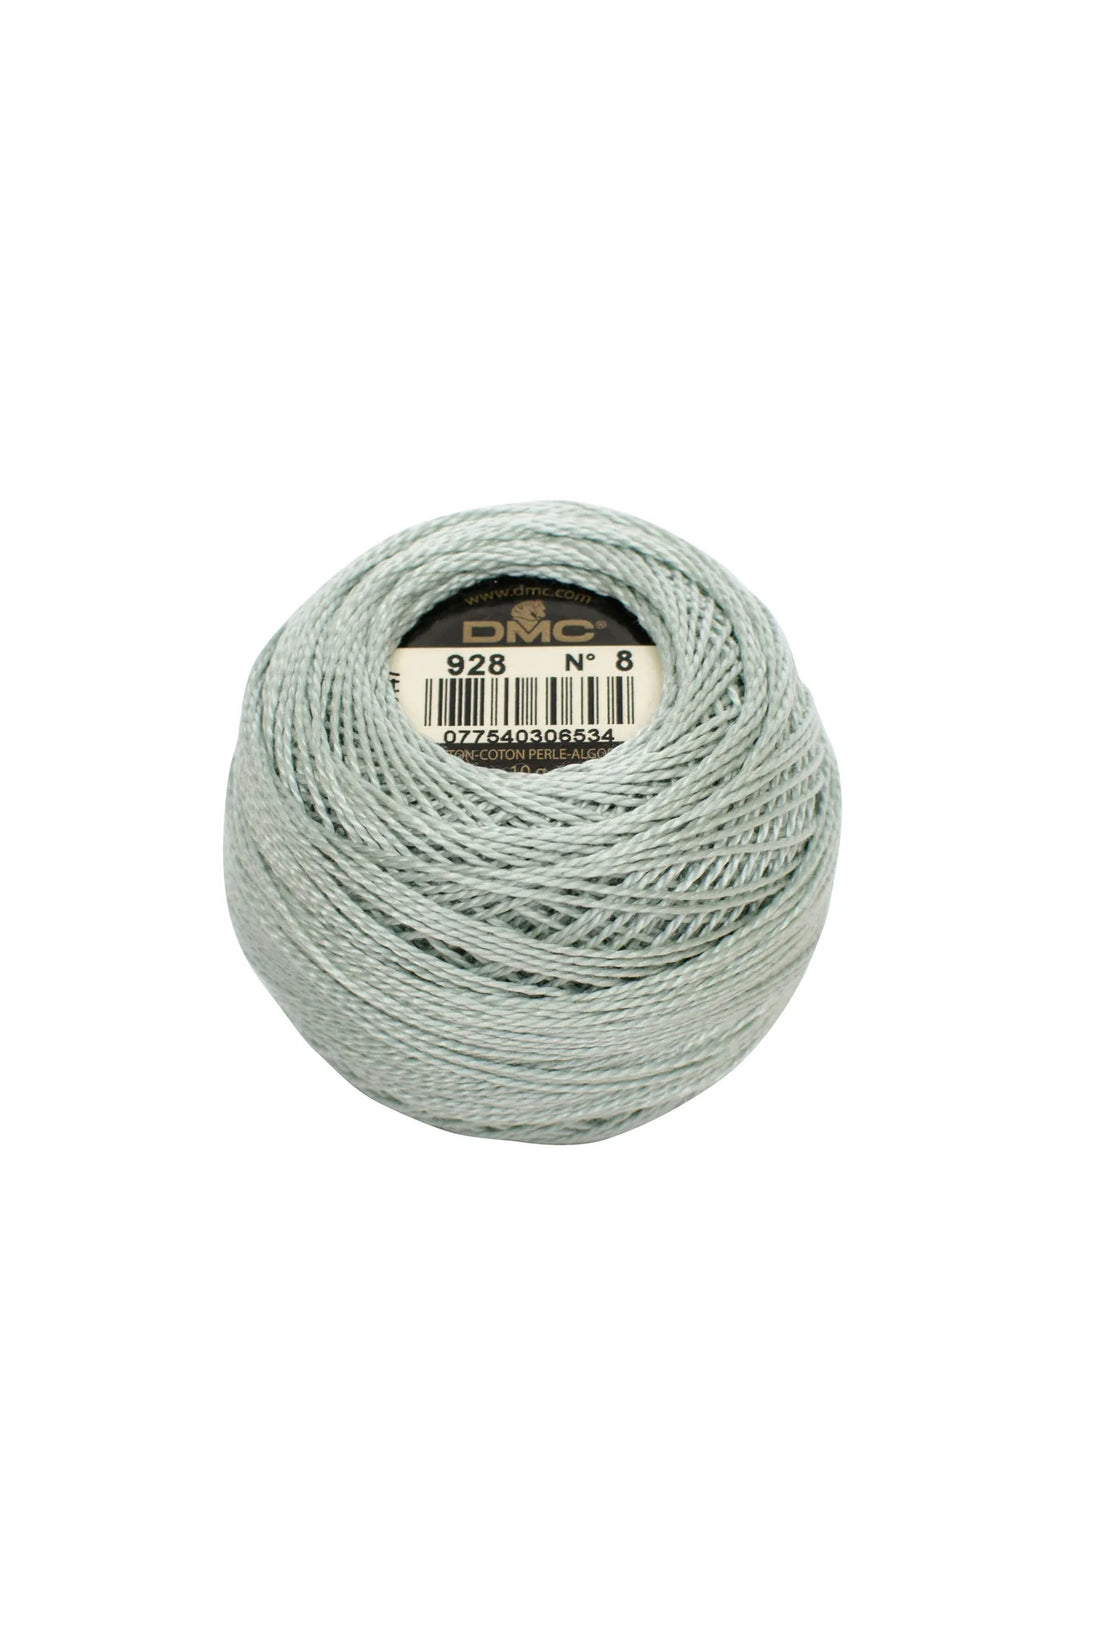 DMC Perle Cotton Thread No 928 | Very Light Grey Green